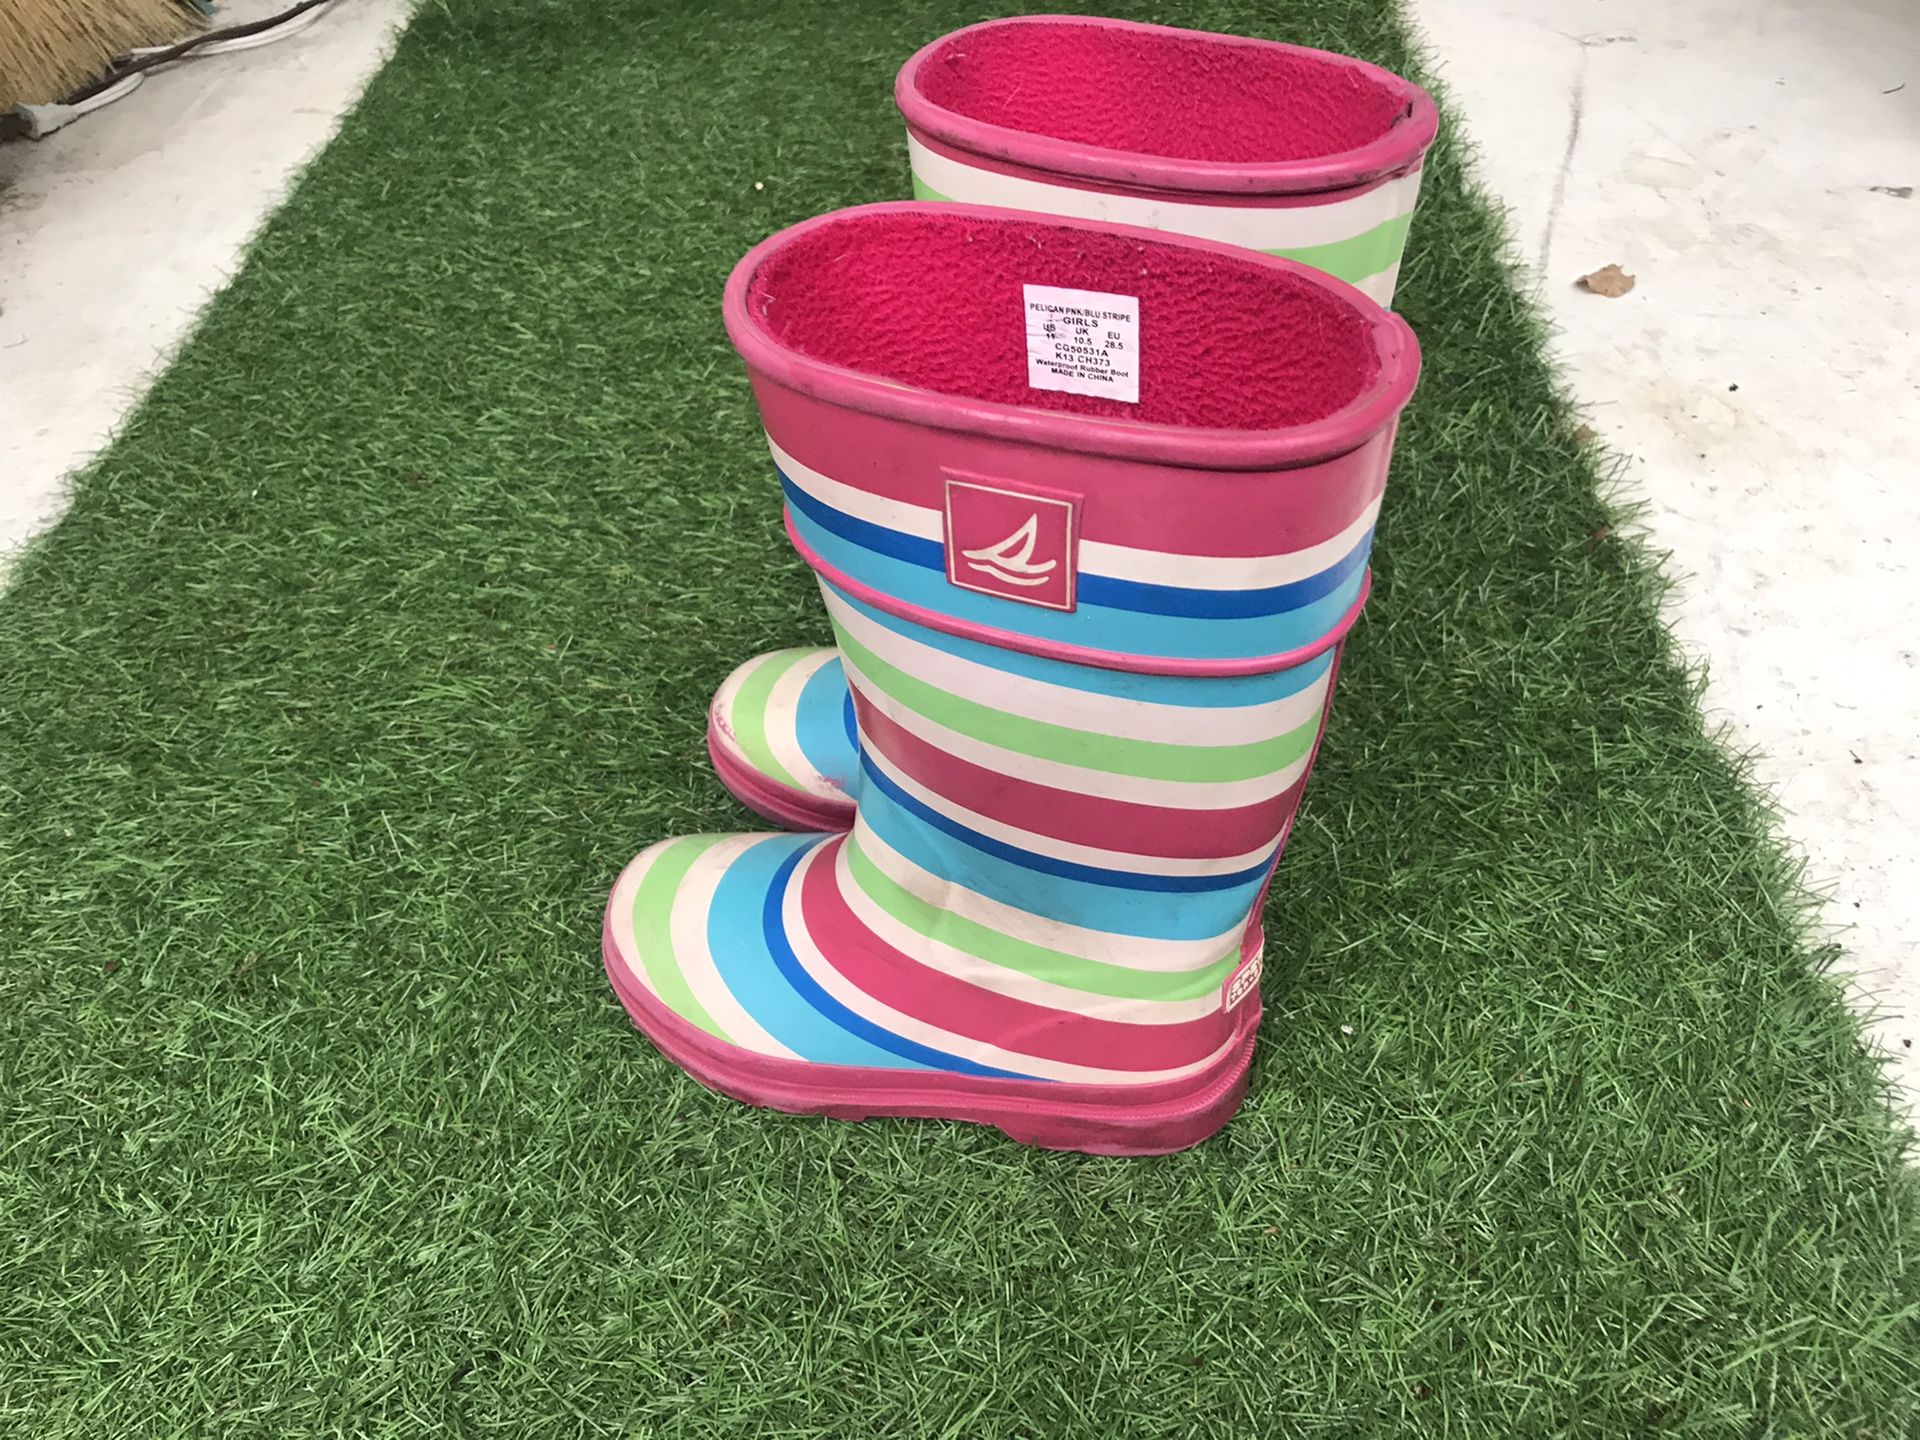 Kids Small girl rain 🌧 boots size 11 Sperry Top Slider brand